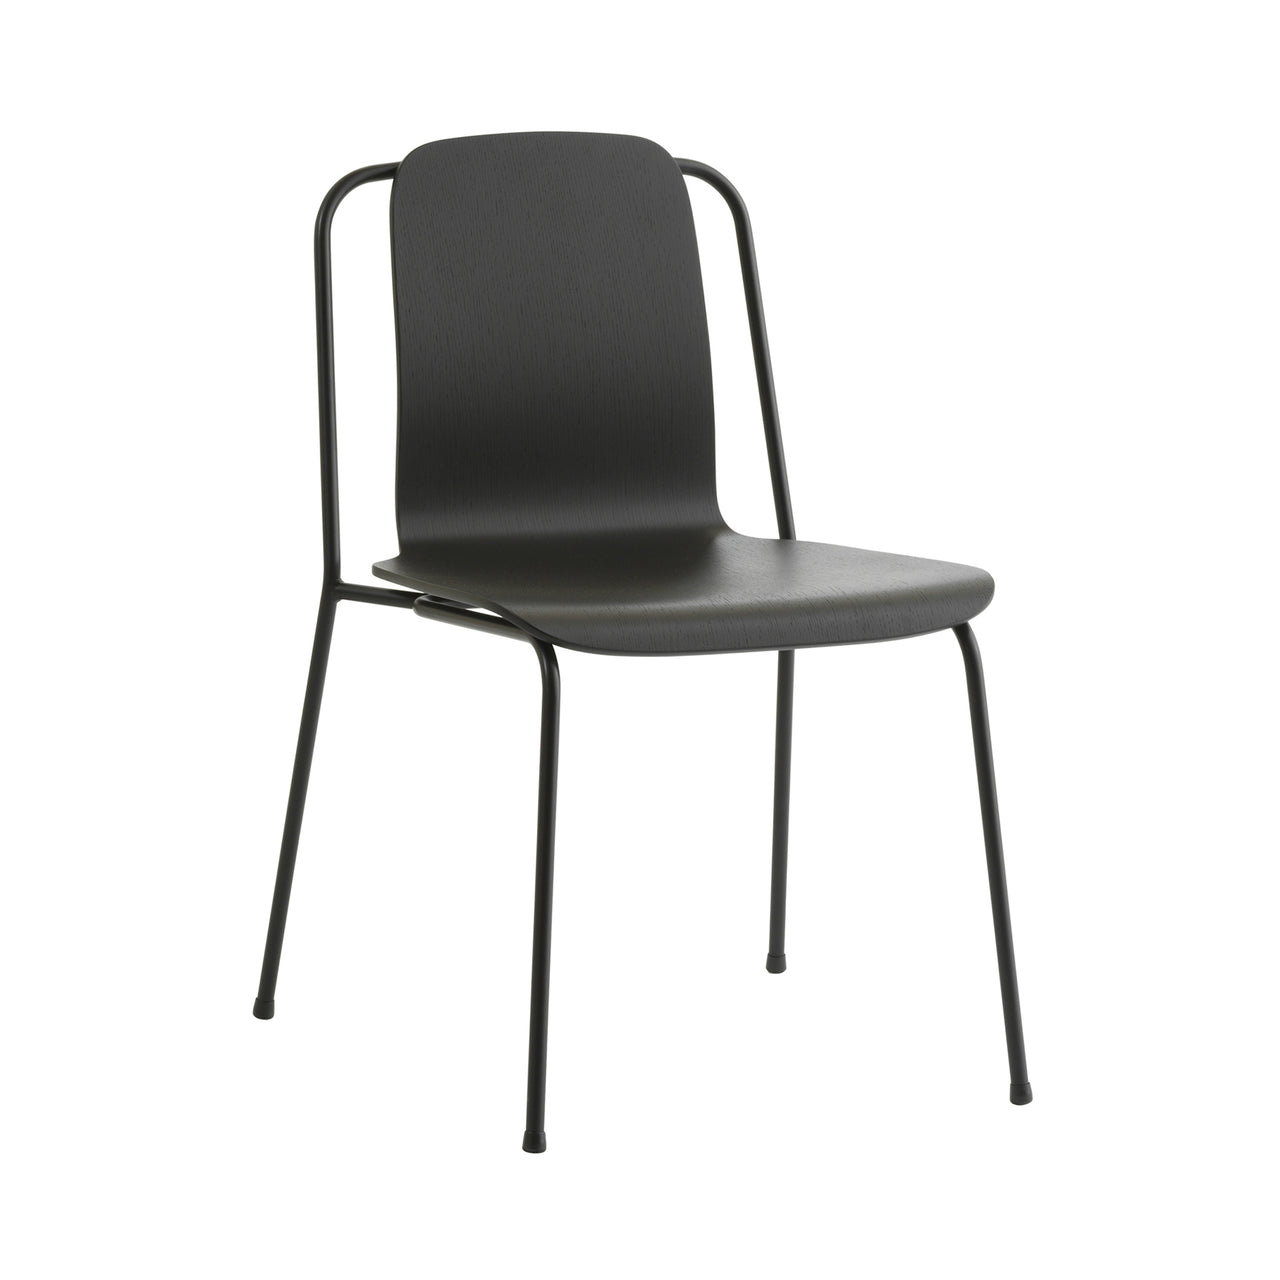 Studio Chair: Black